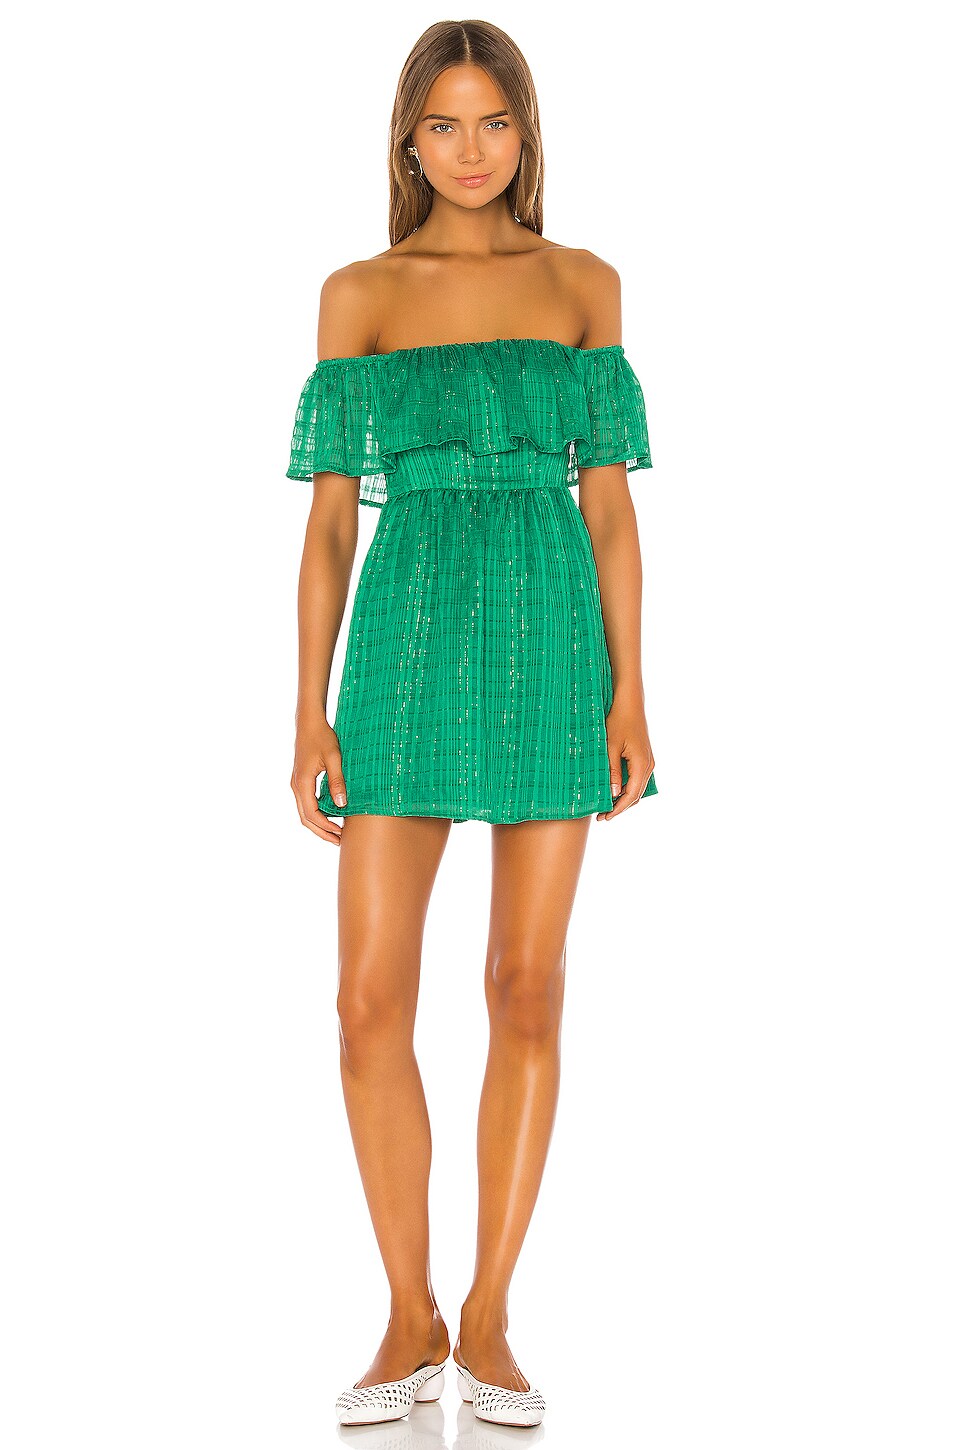 Buy > kelly green mini dress > in stock